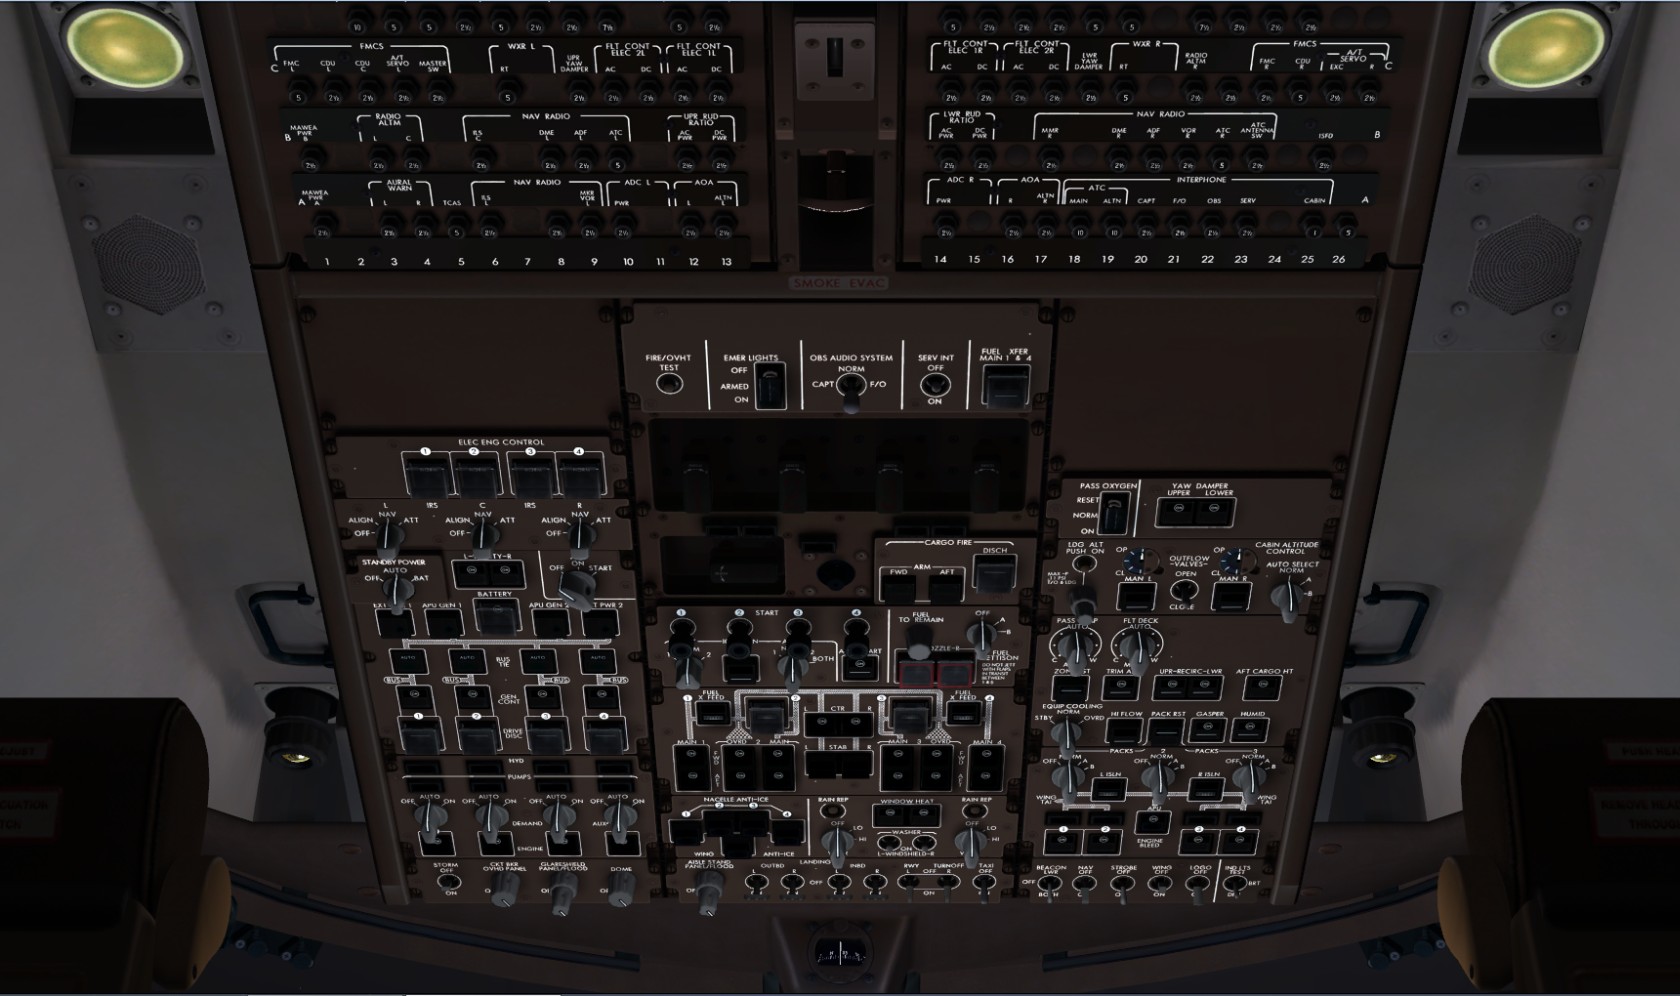 fsx default 747 cockpit cfg